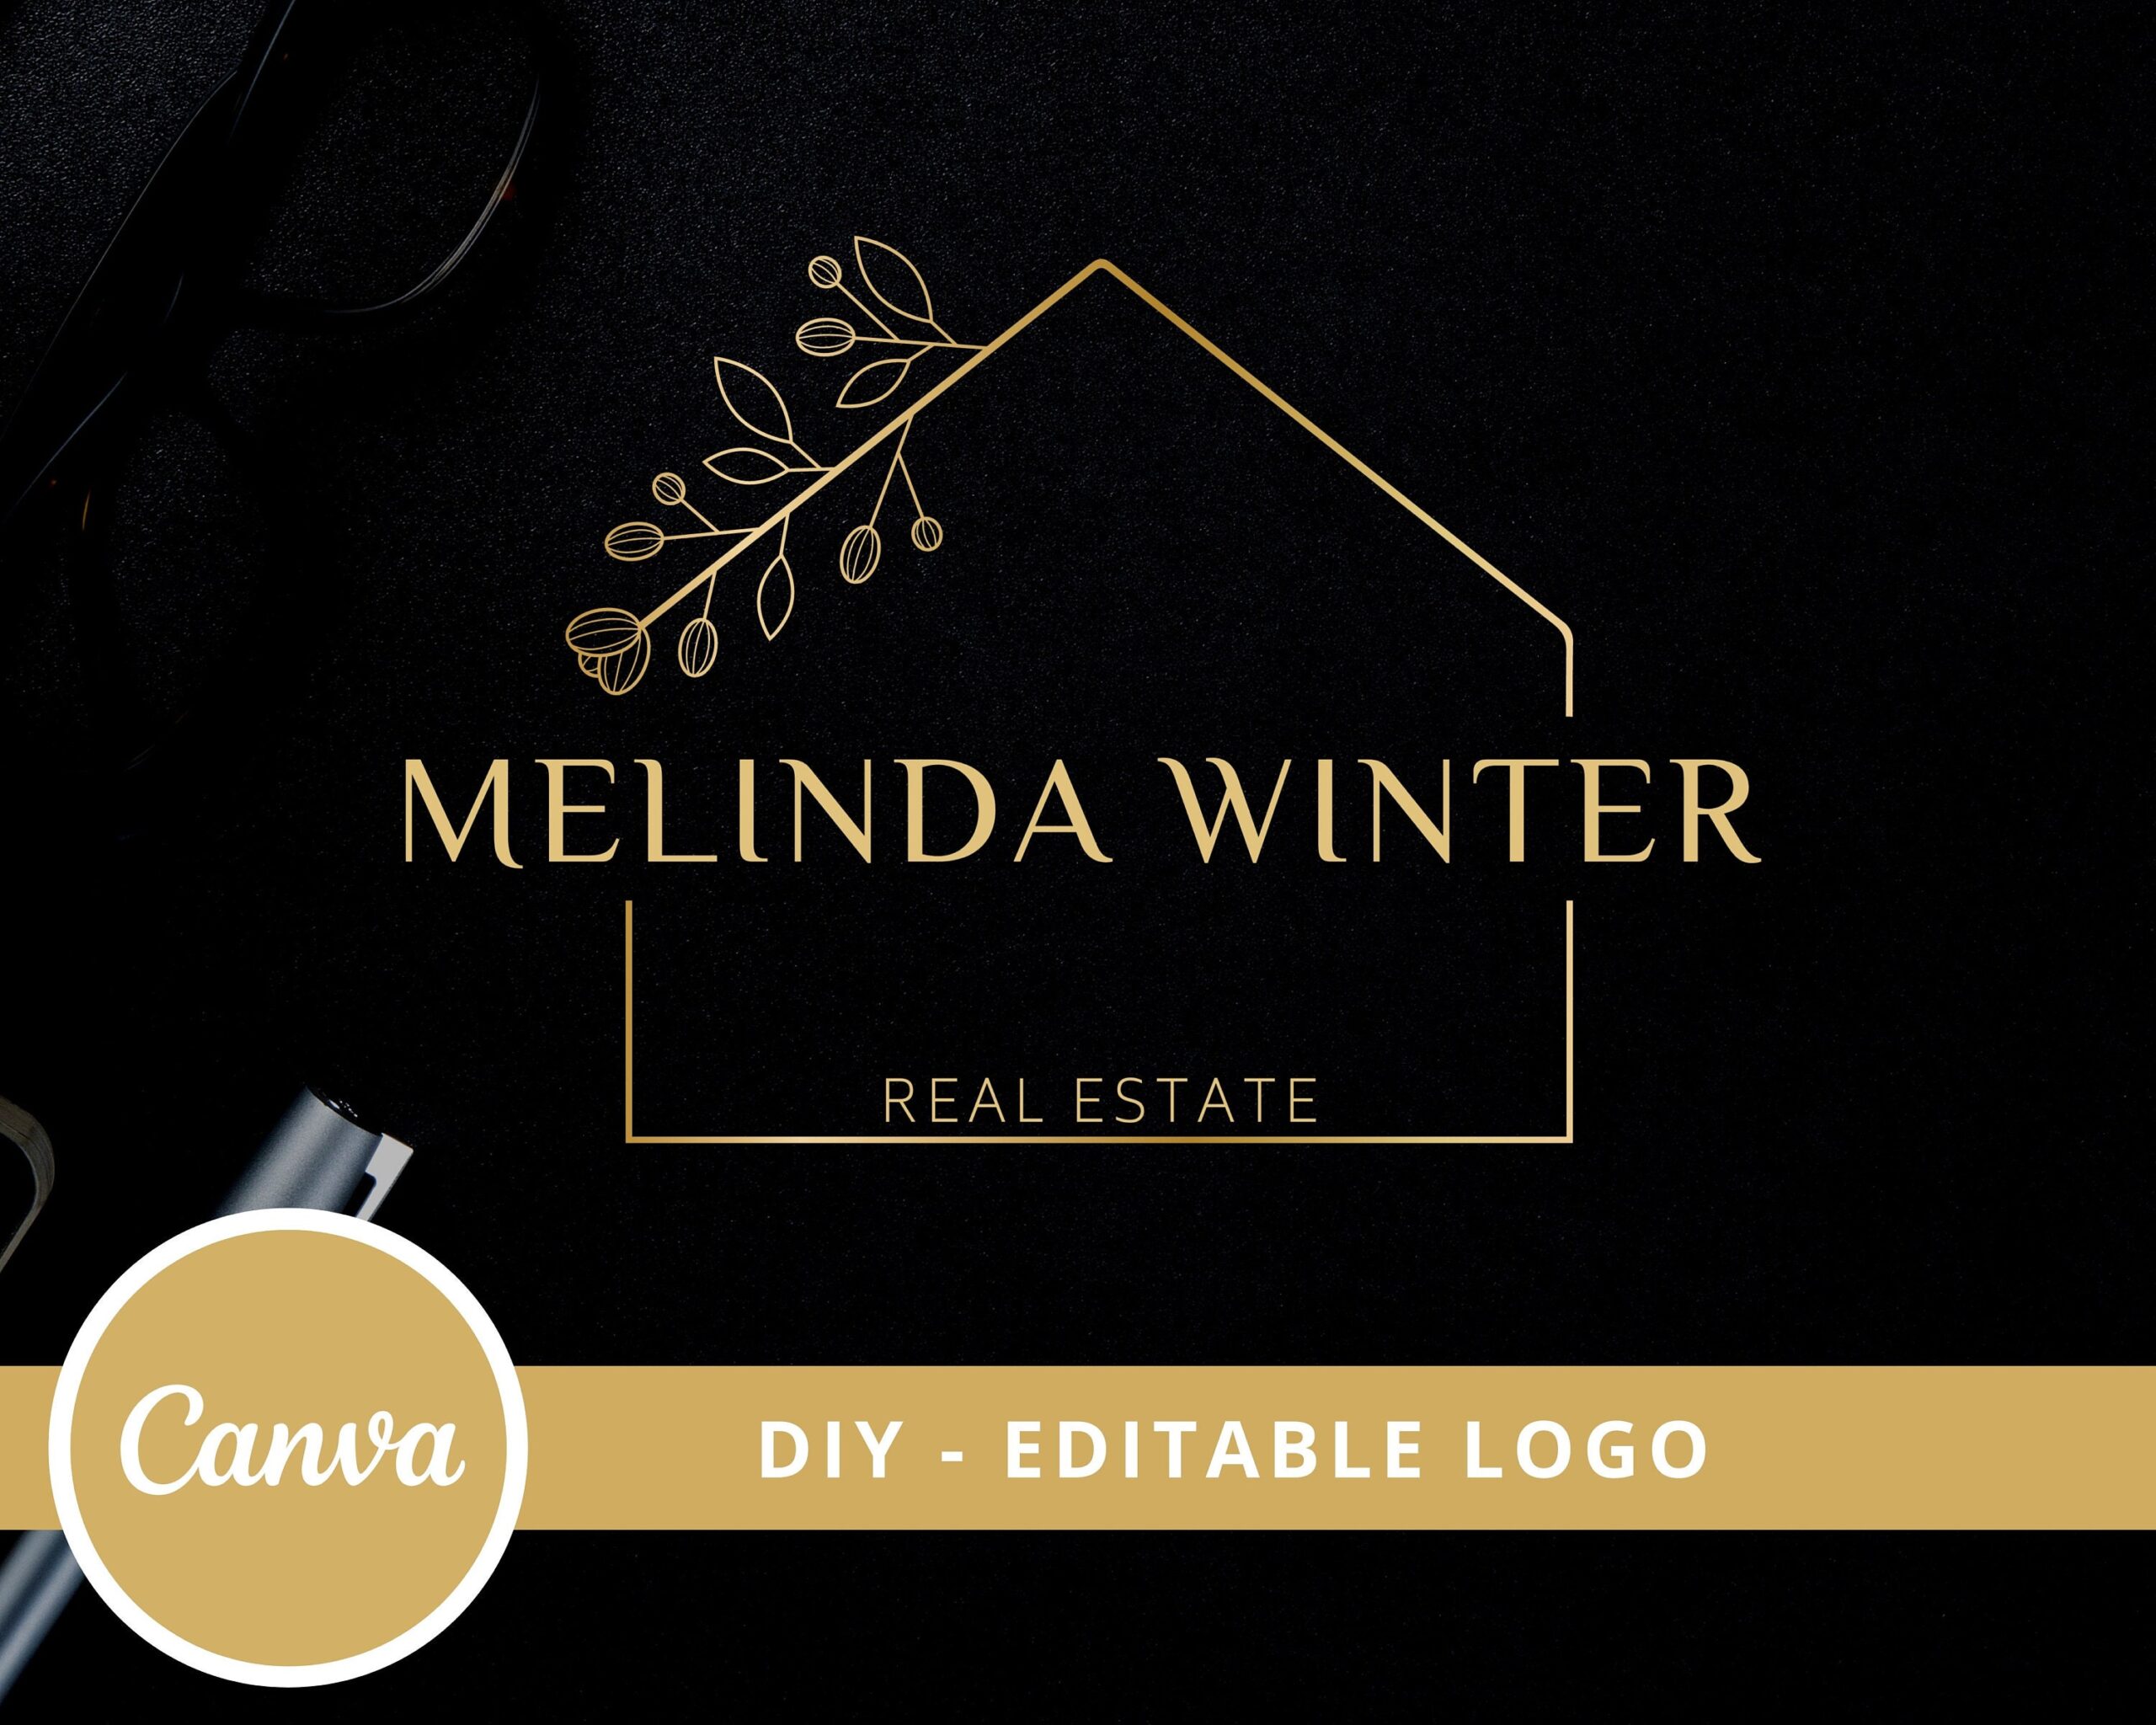 Editable Logo Design - Real Estate Canva Template - Floral House, DIY Logo, Realtor Logo, House Logo, Instant Access, Edit & Download